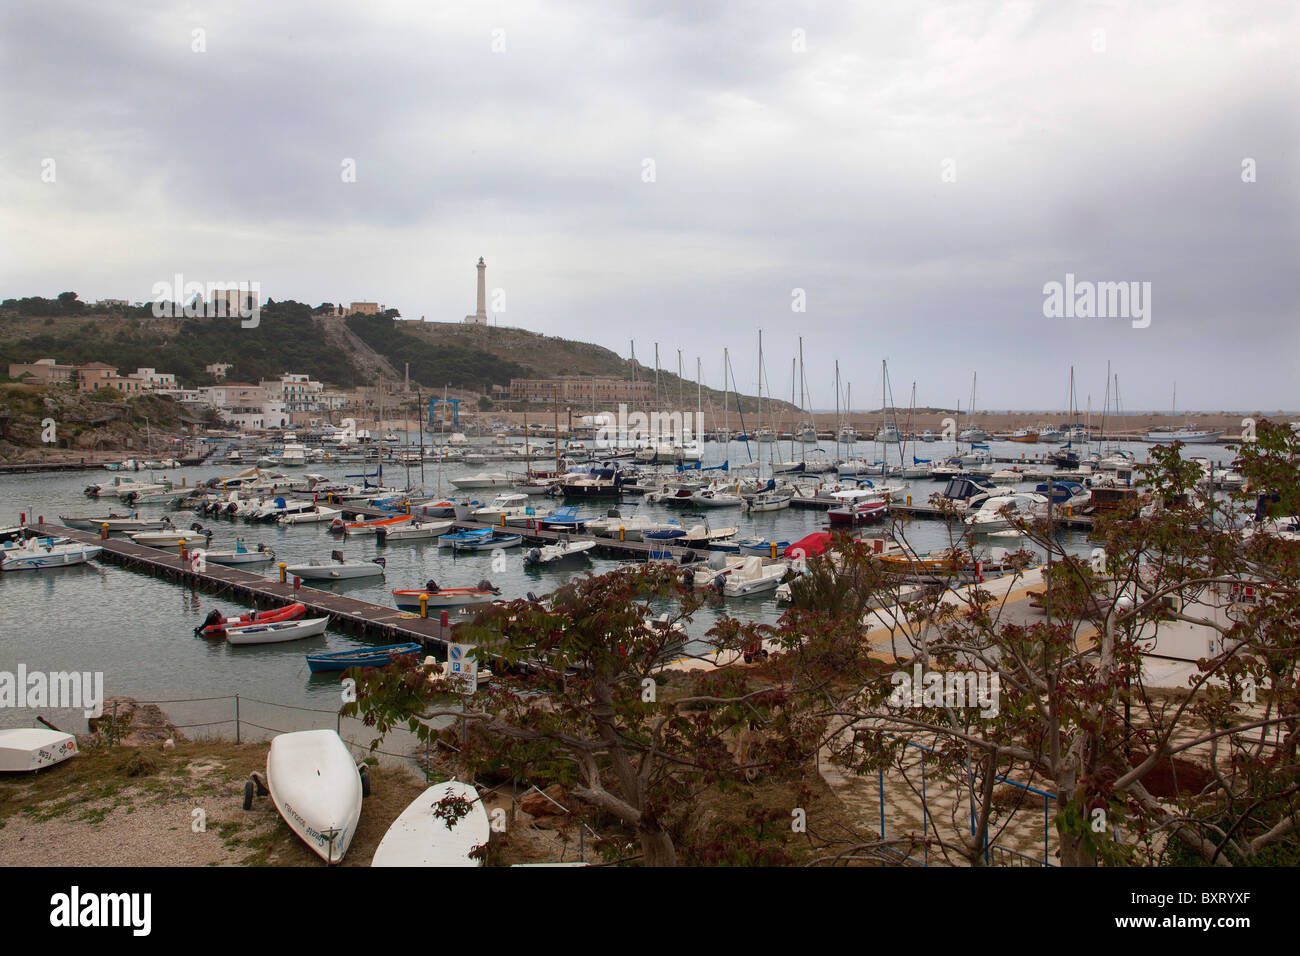 Port and lighthouse in background, Santa Maria di Leuca, Puglia, Italy Stock Photo